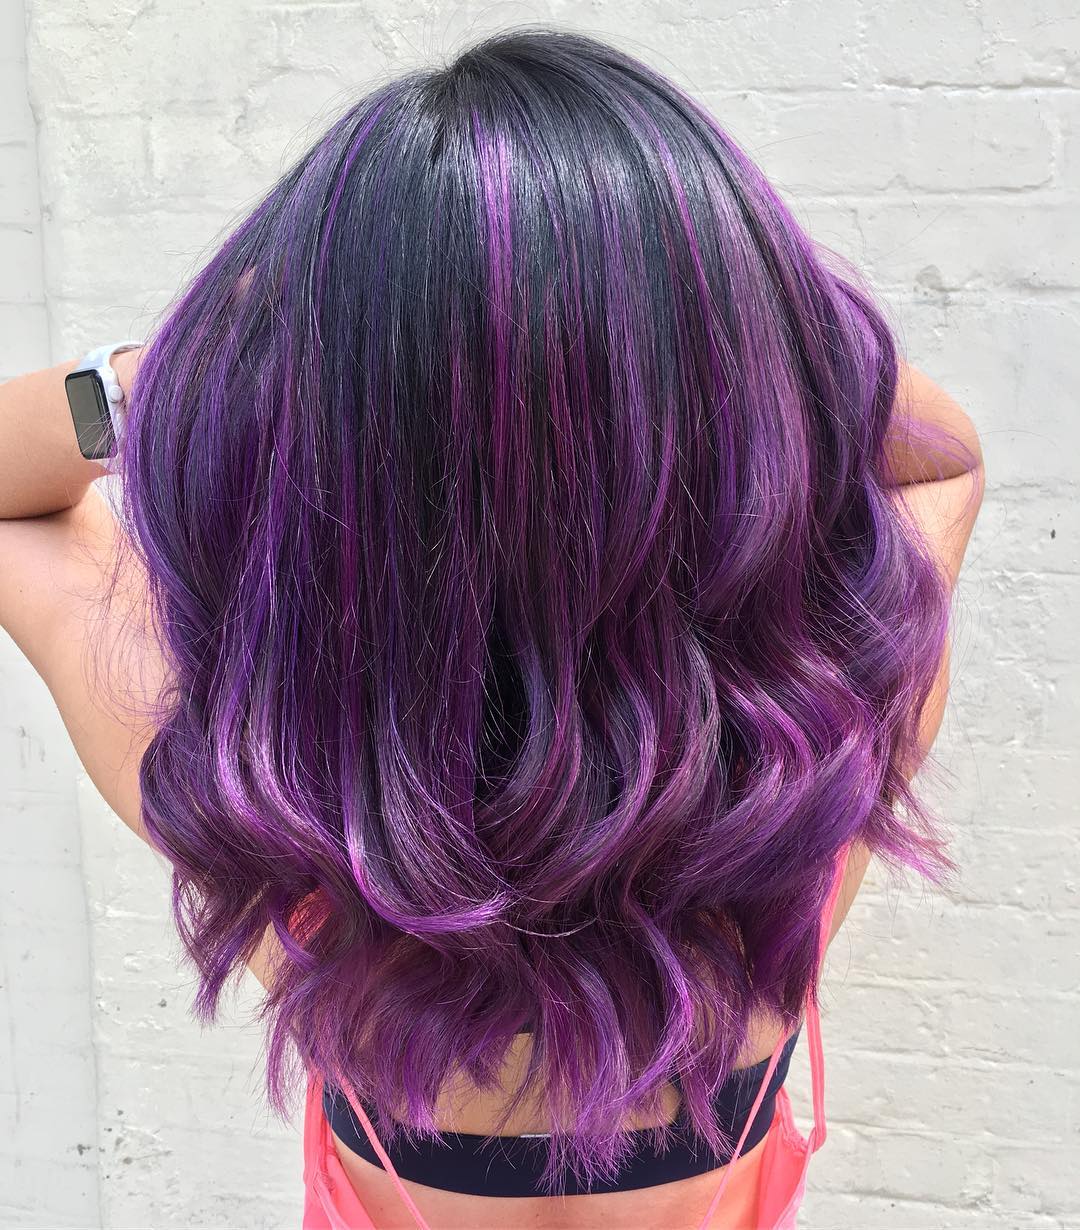 Balayage on Dark Hair with Purple Highlights